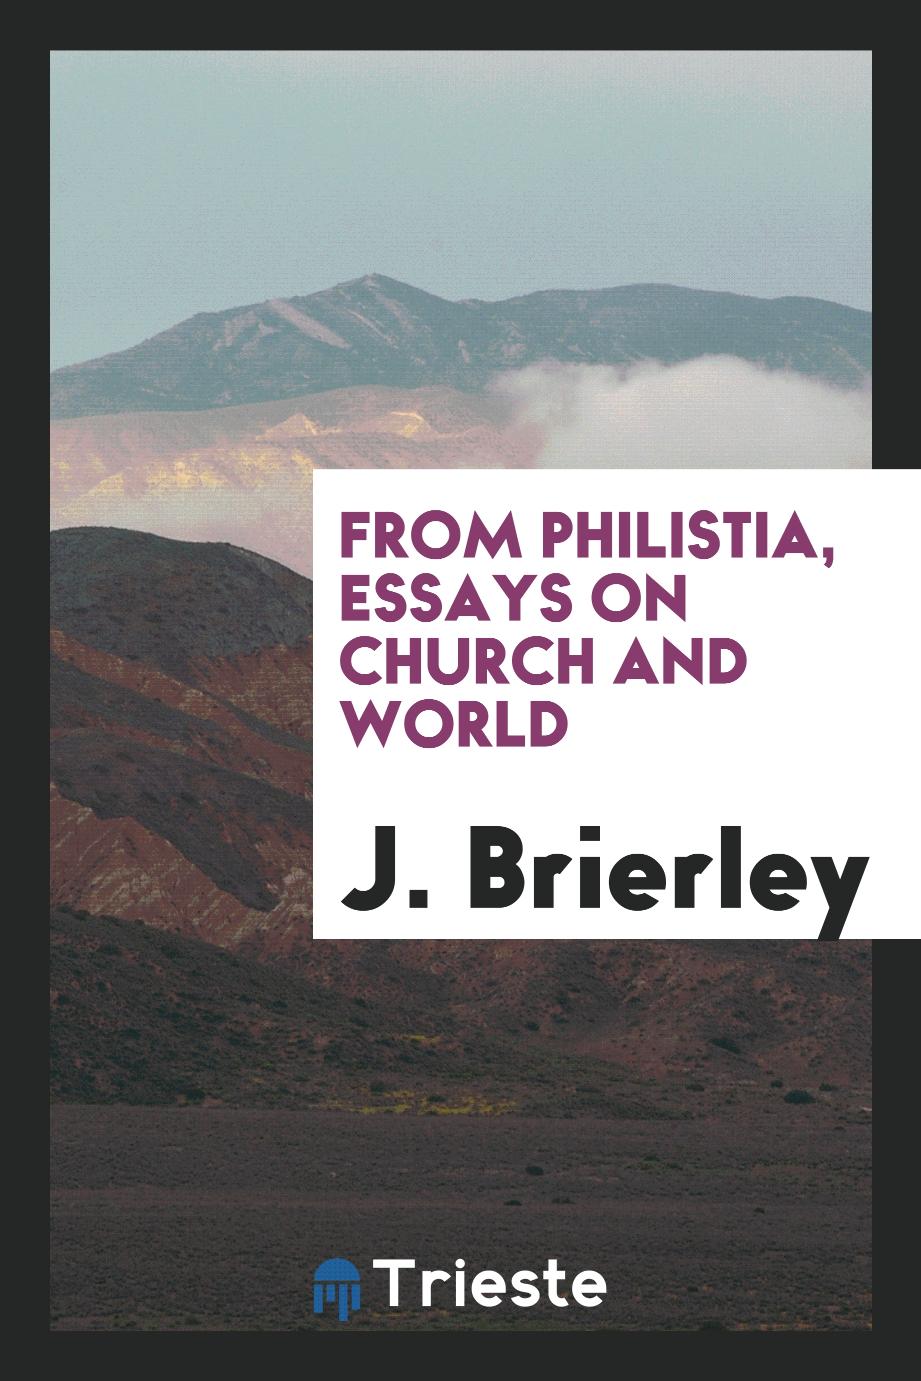 From Philistia, essays on church and world